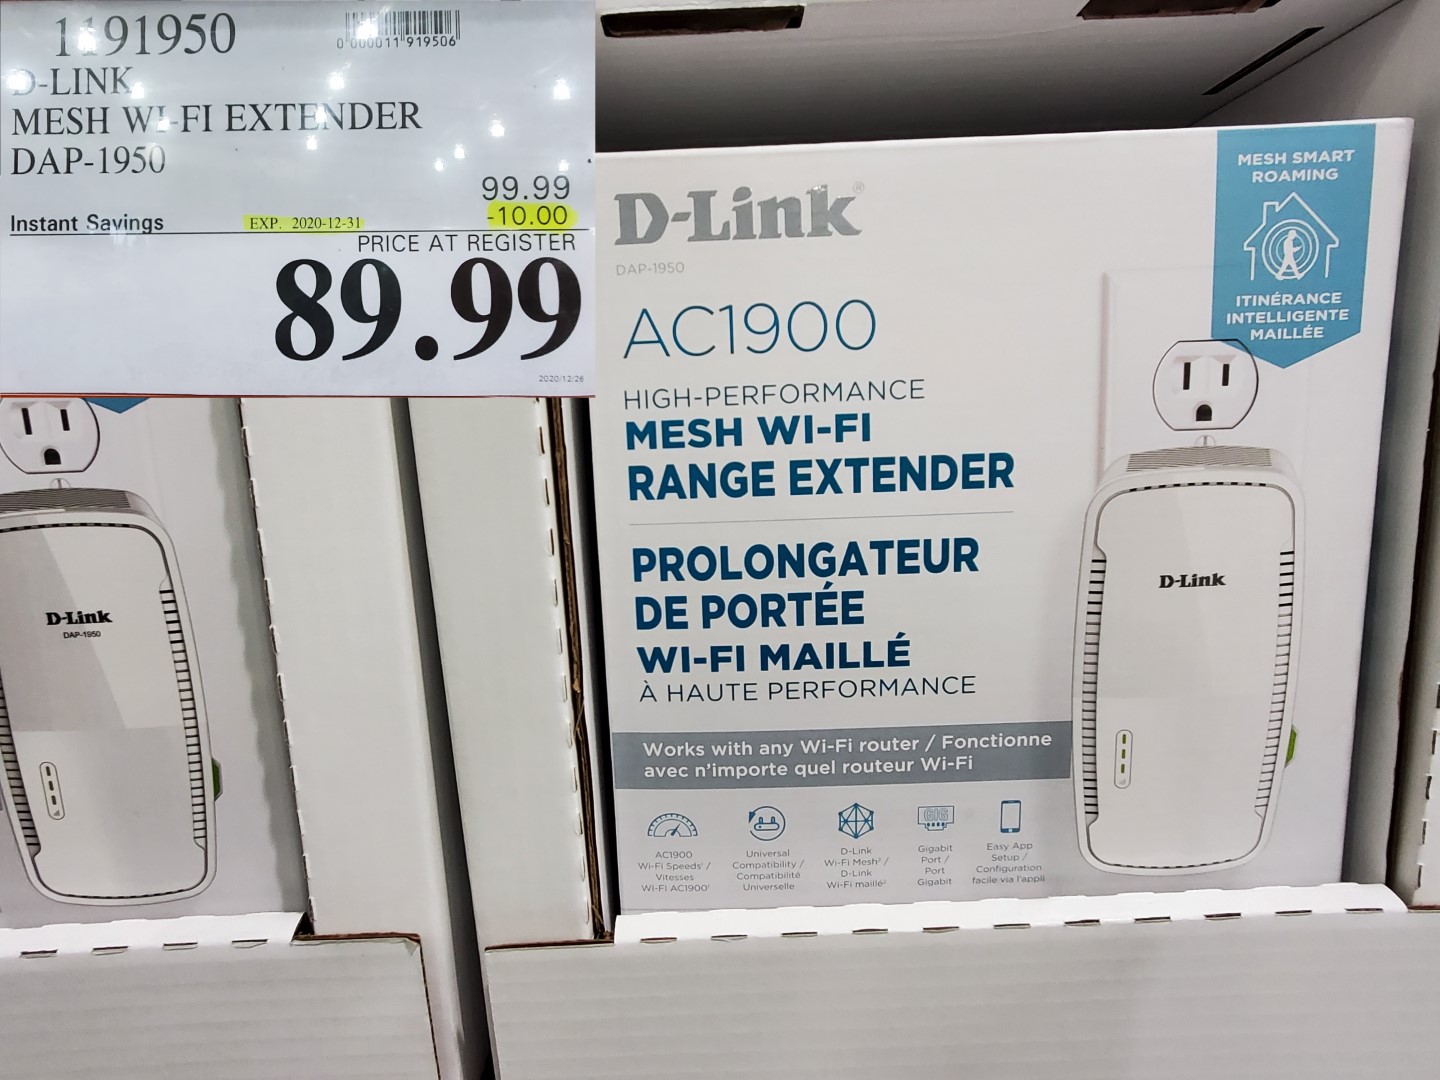 D-link mesh wi-fi range extender